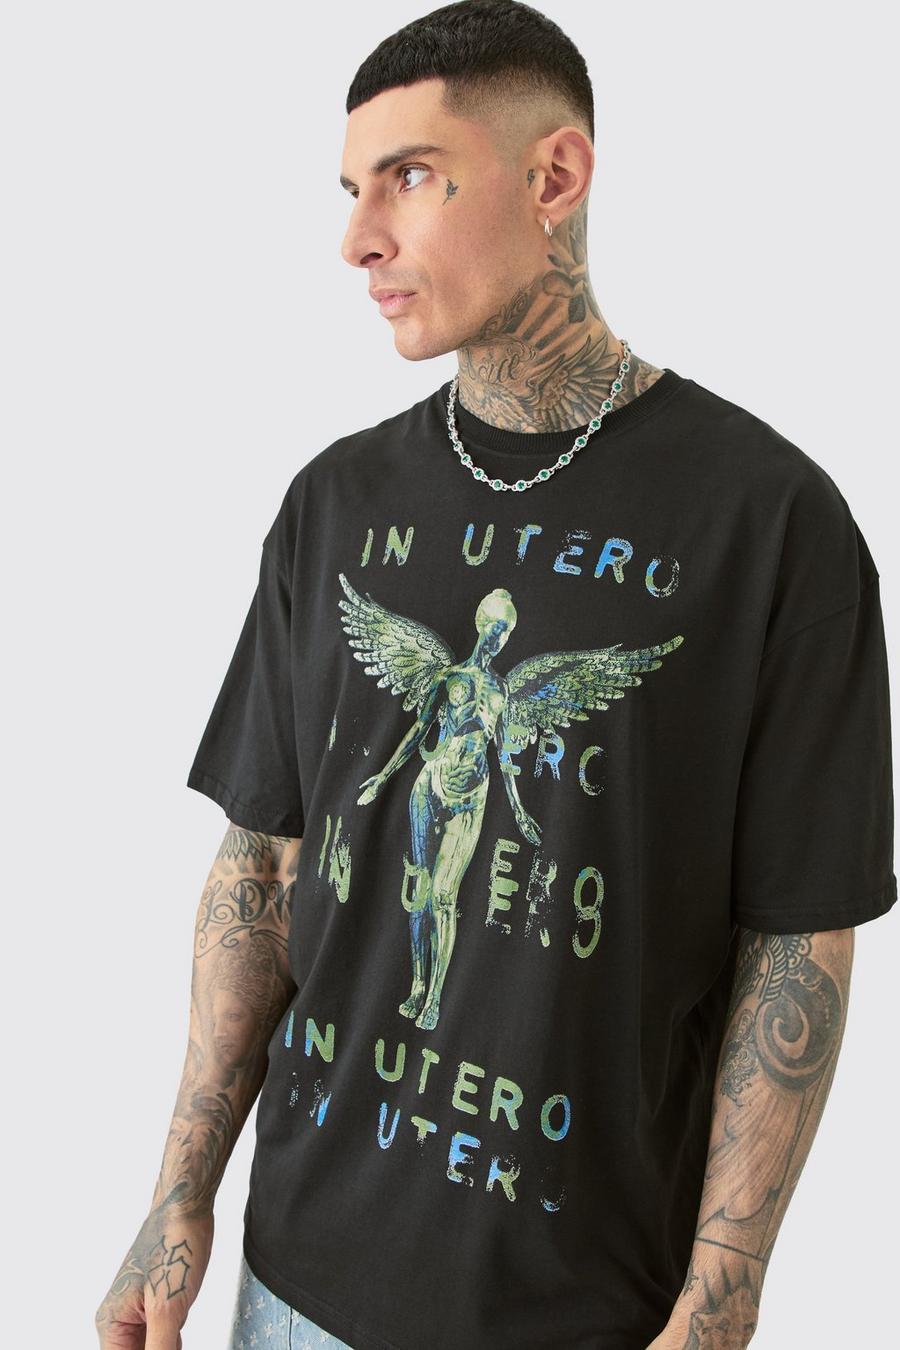 Camiseta Tall oversize negra con estampado de Nirvana, Black image number 1